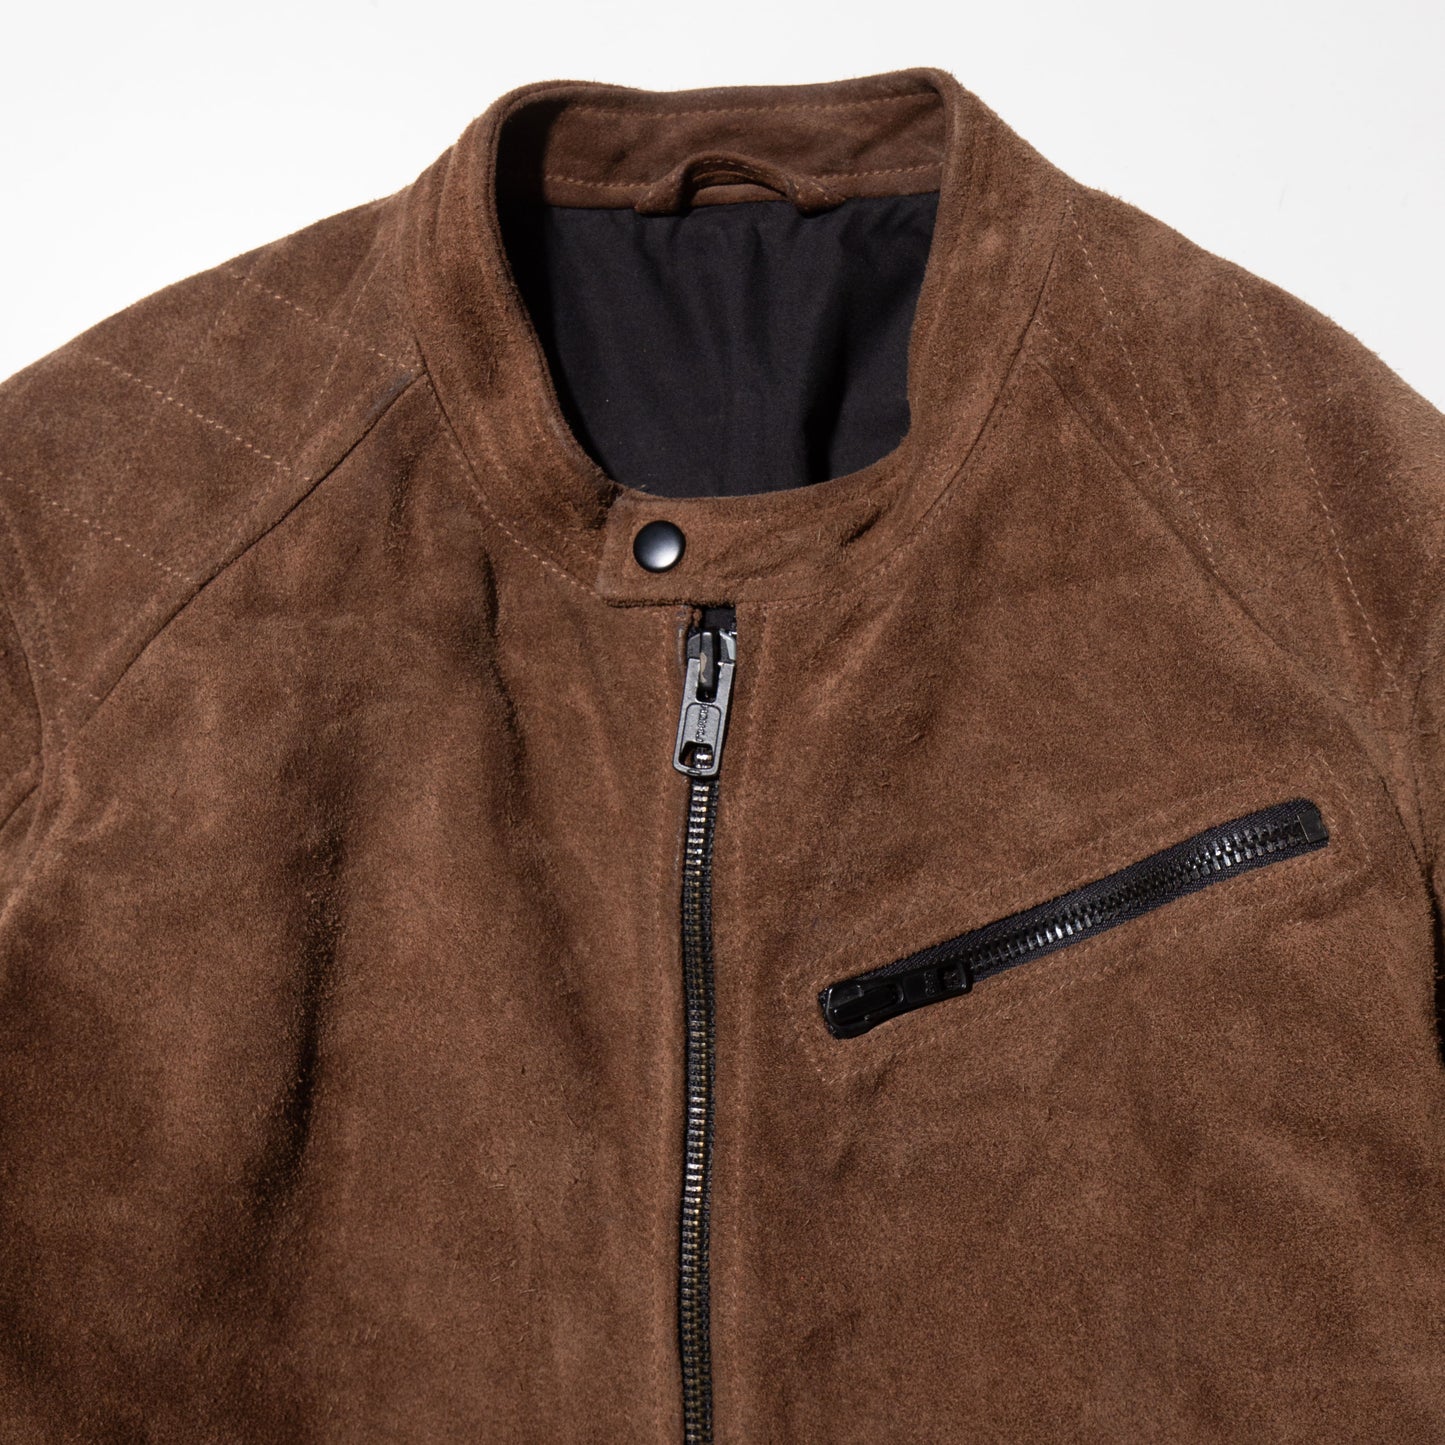 vintage single suede leather jacket